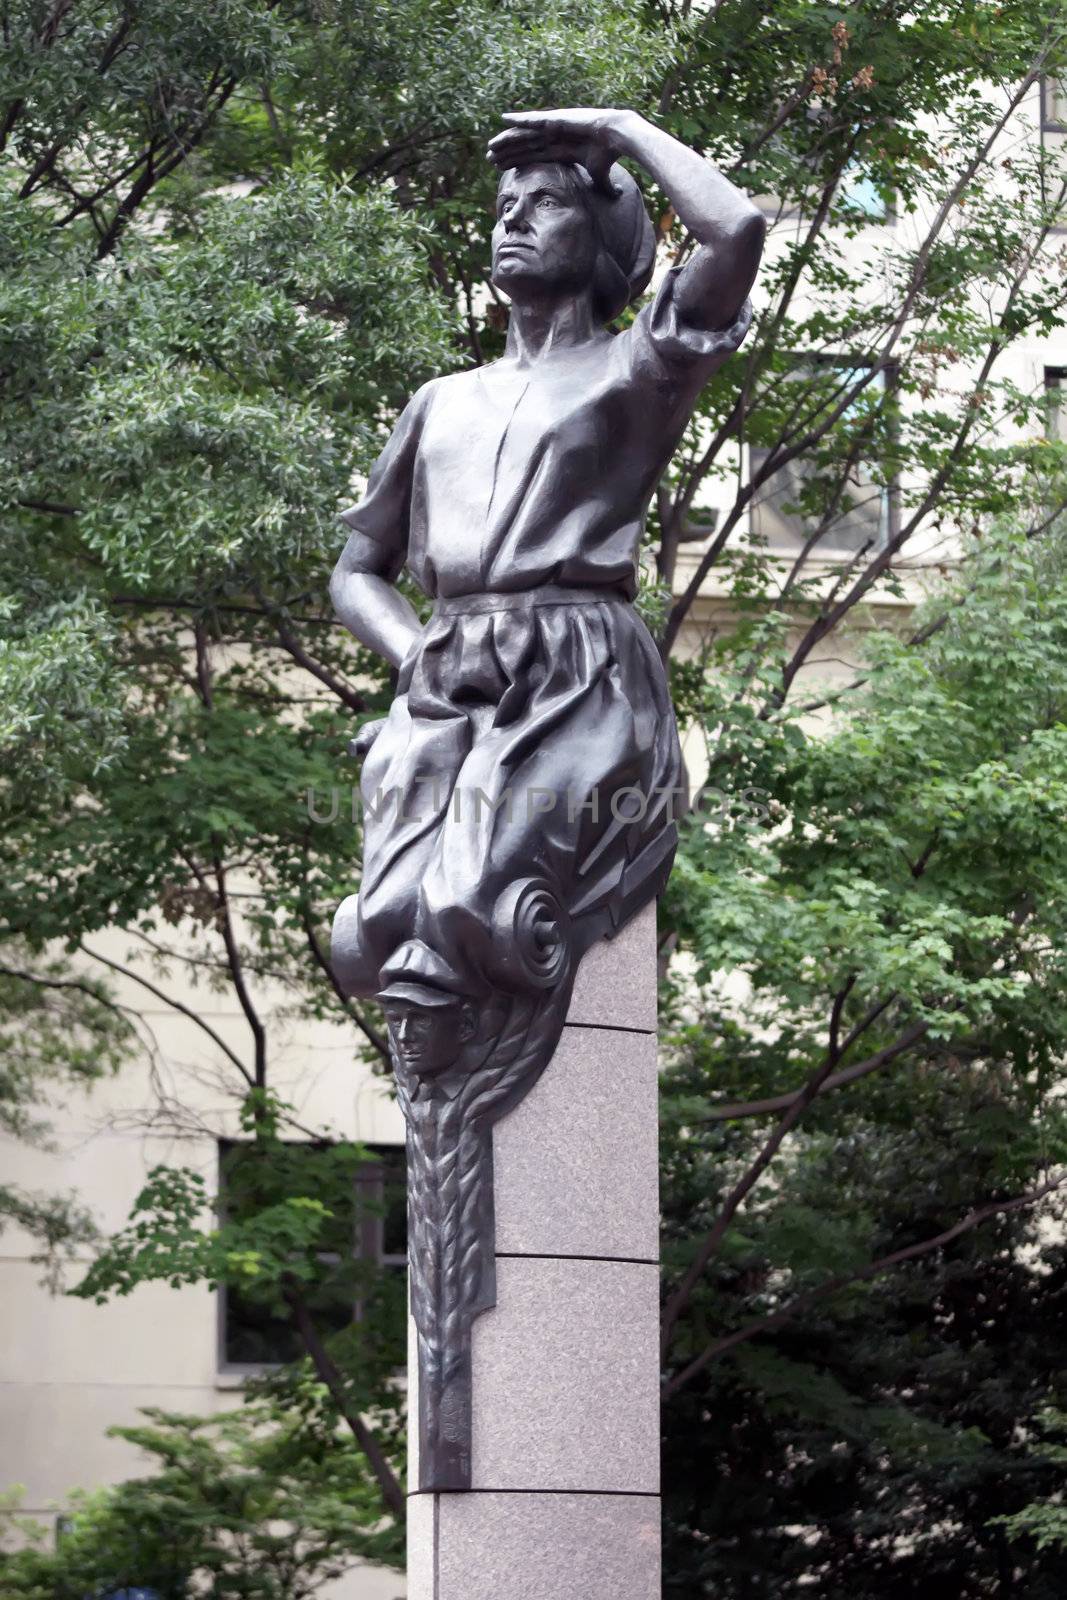 A statue at Charlotte uptown in North Carolina